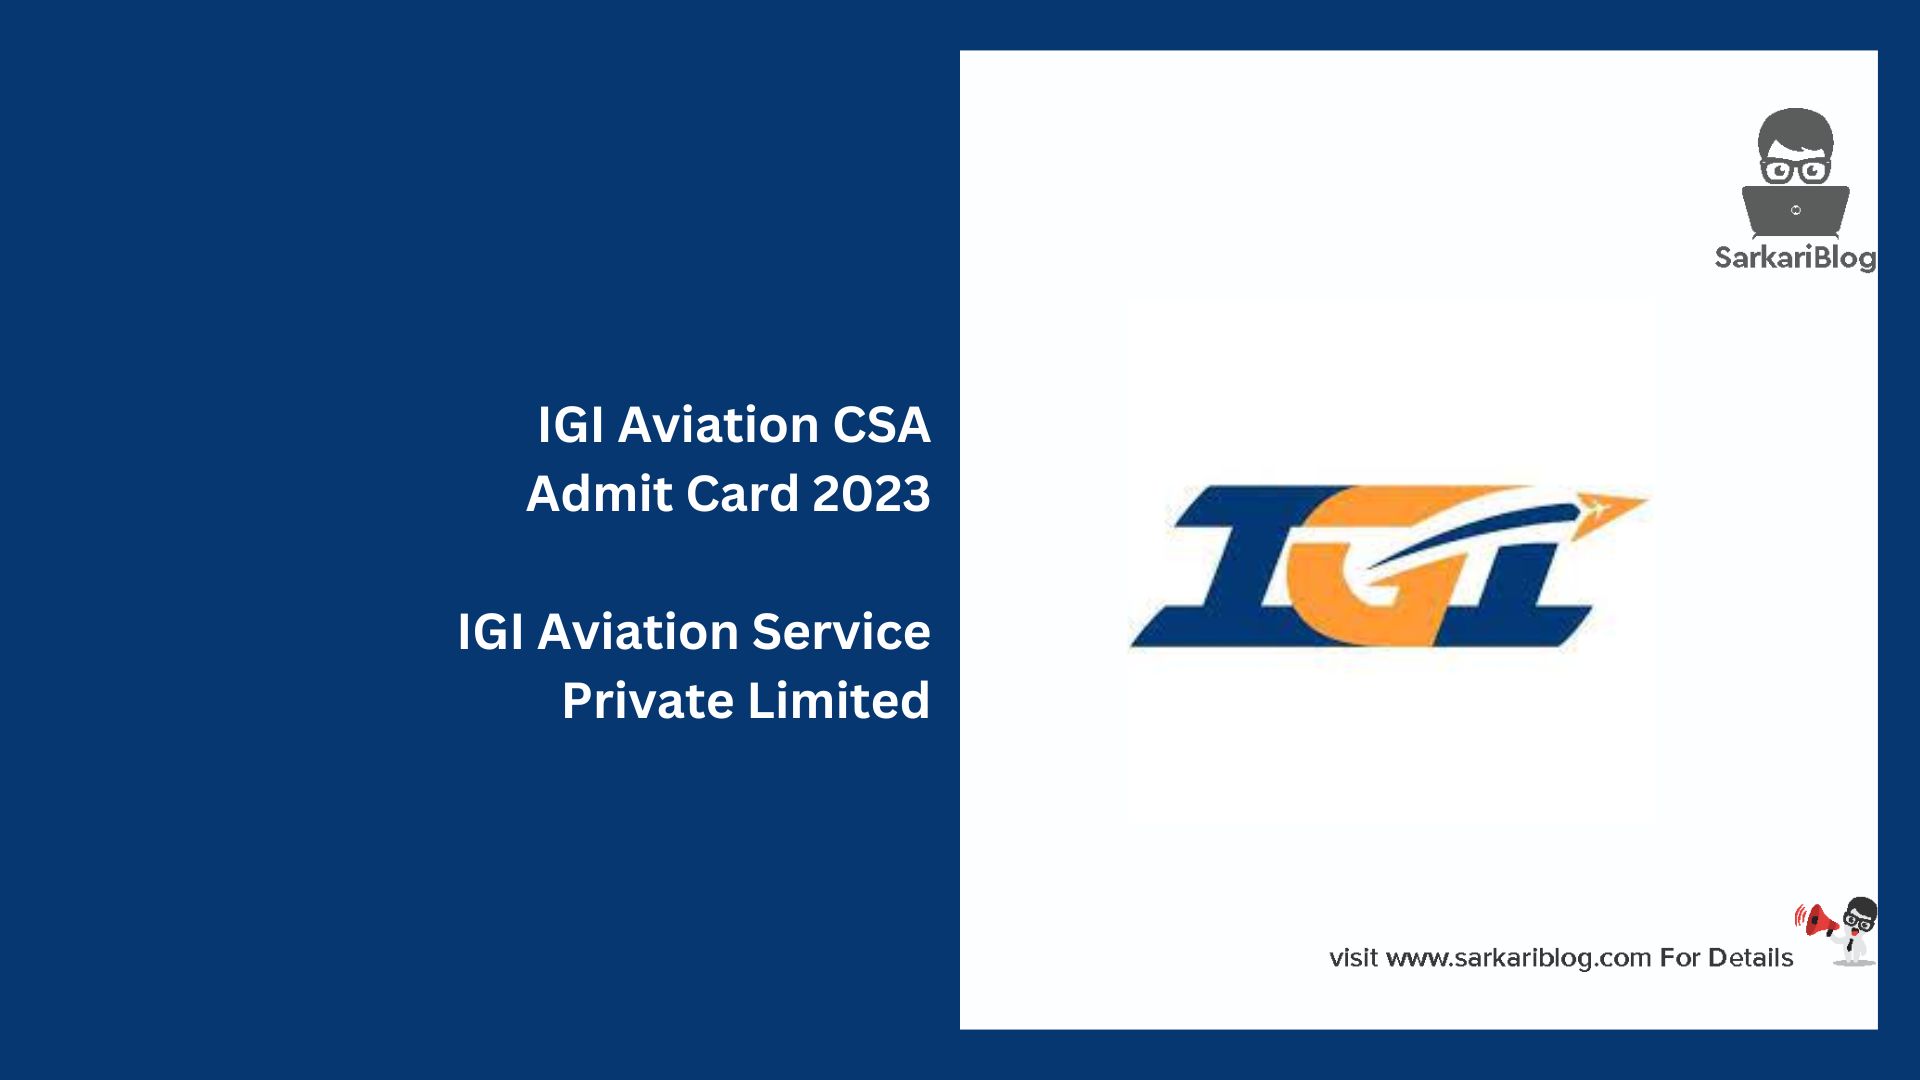 IGI Aviation CSA Admit Card 2023